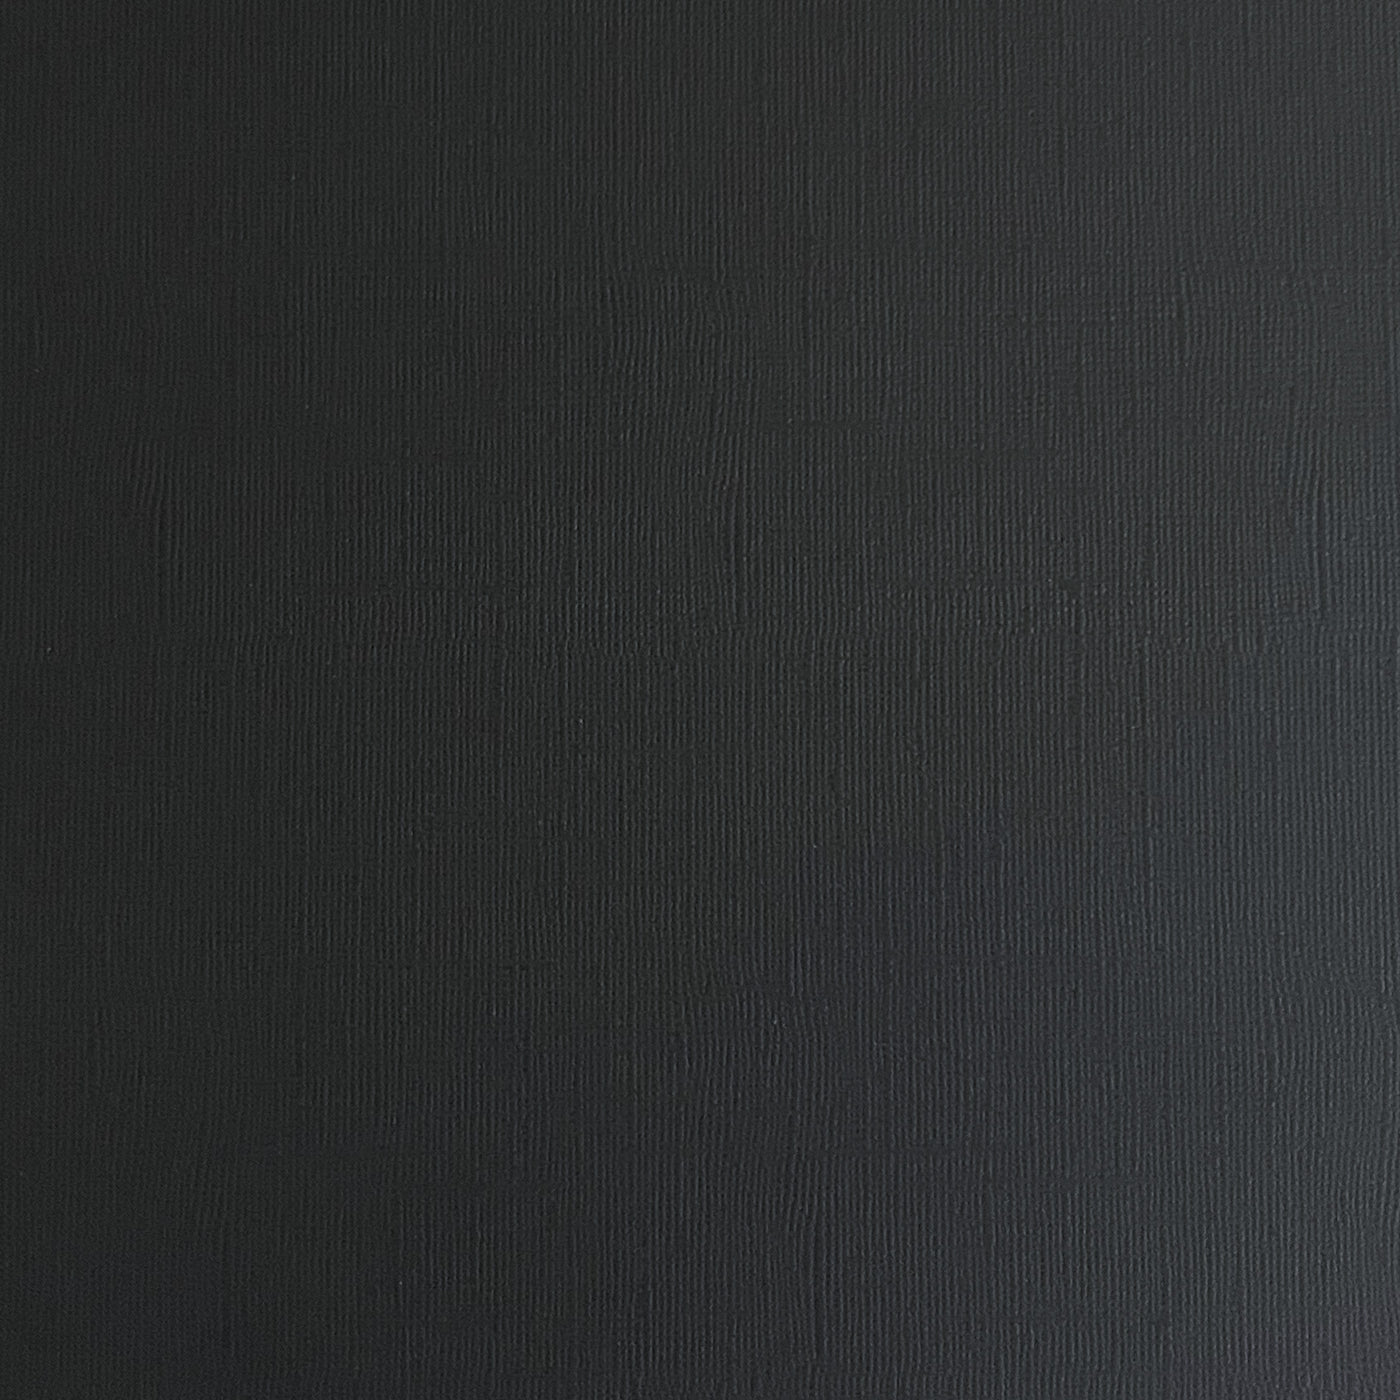 JET BLACK - Textured 12x12 Cardstock - Encore Paper for Cricut Cutting